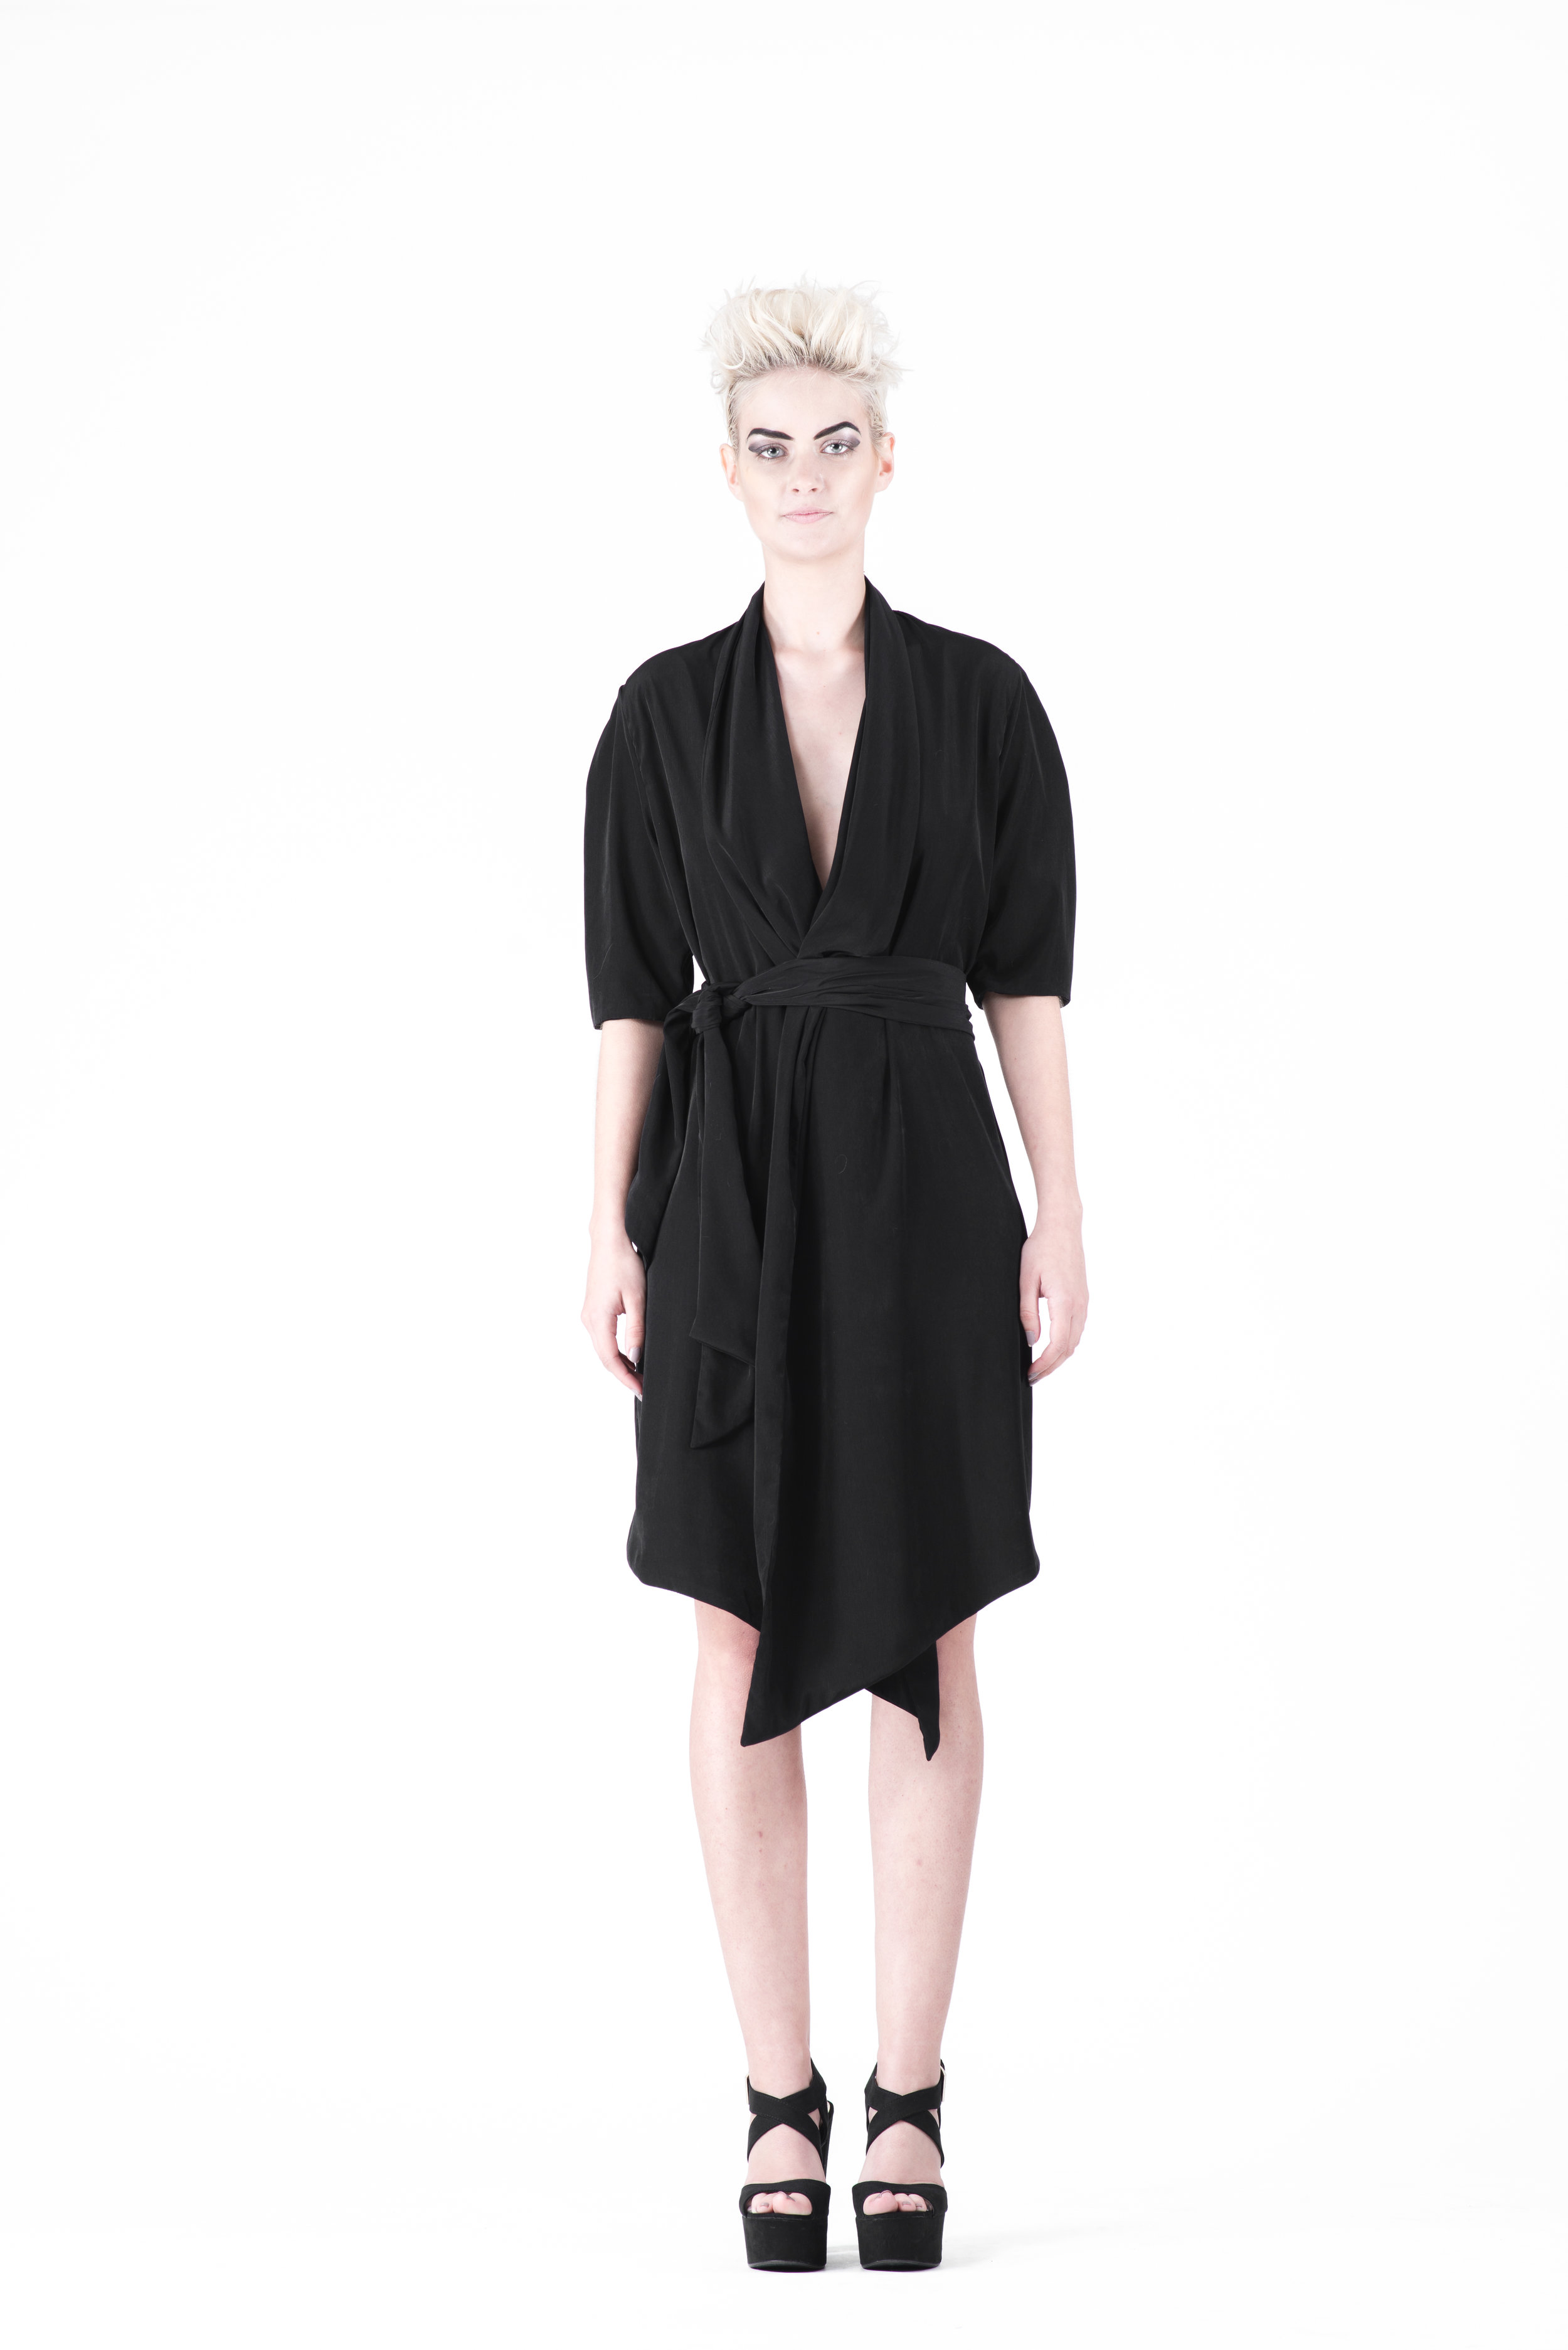 zaramia-ava-zaramiaava-leeds-fashion-designer-ethical-sustainable-tailored-minimalist-maika-dress-obi-belt-black-versatile-drape-cowl-styling-womenswear-models-photoshoot-41